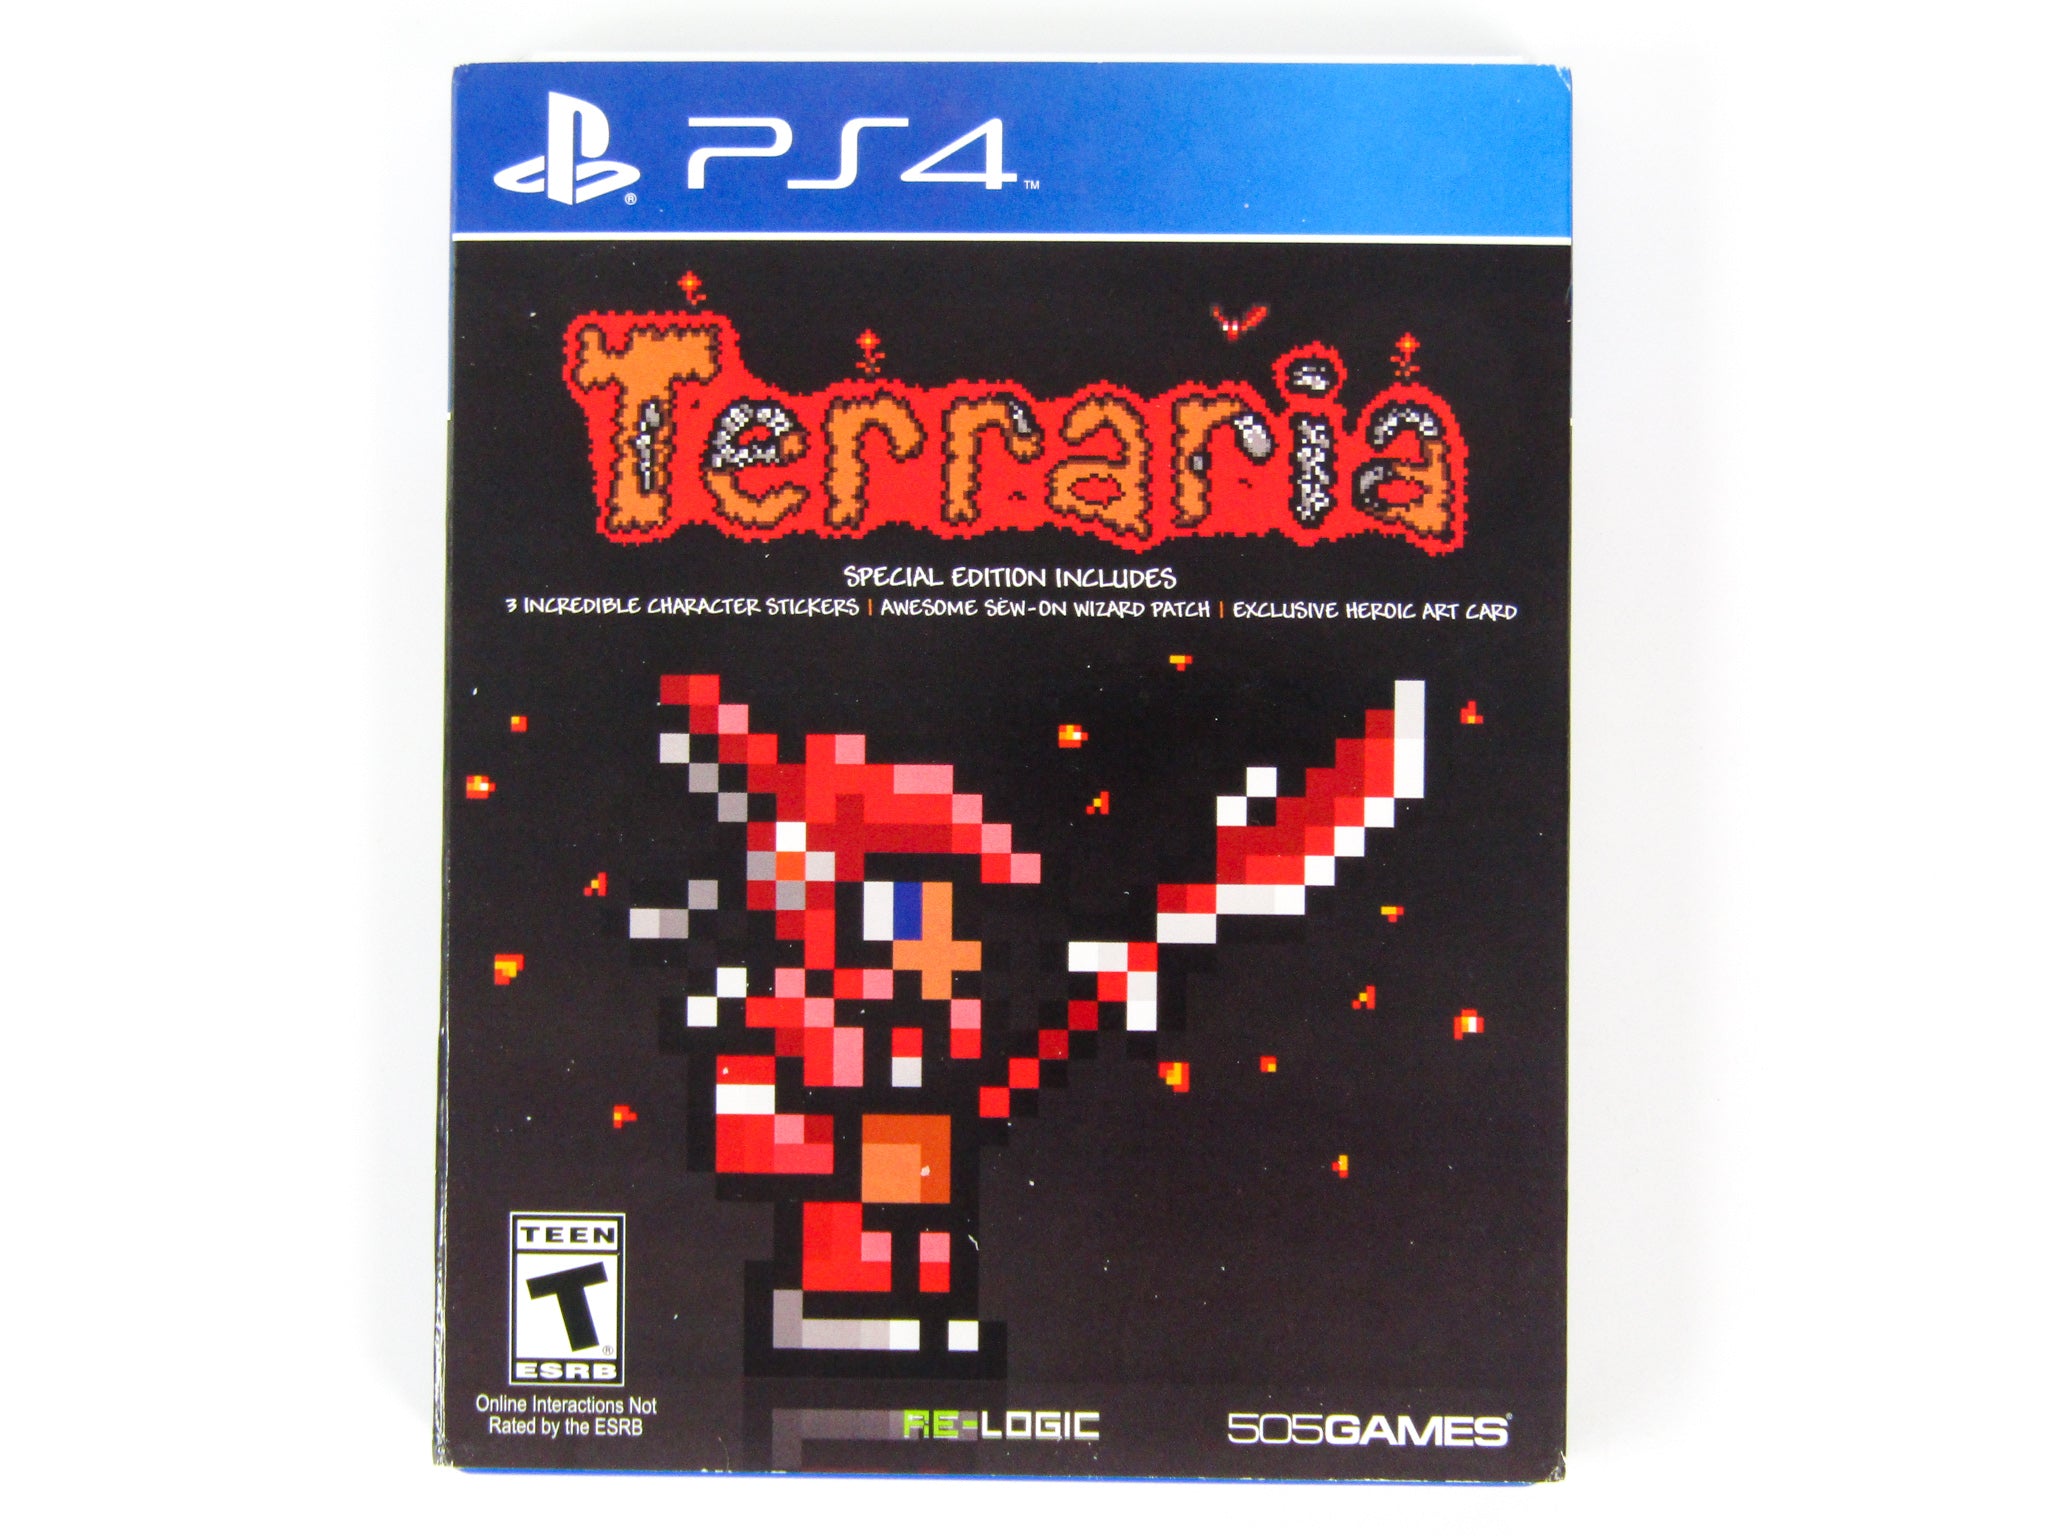 Terraria - PlayStation 4